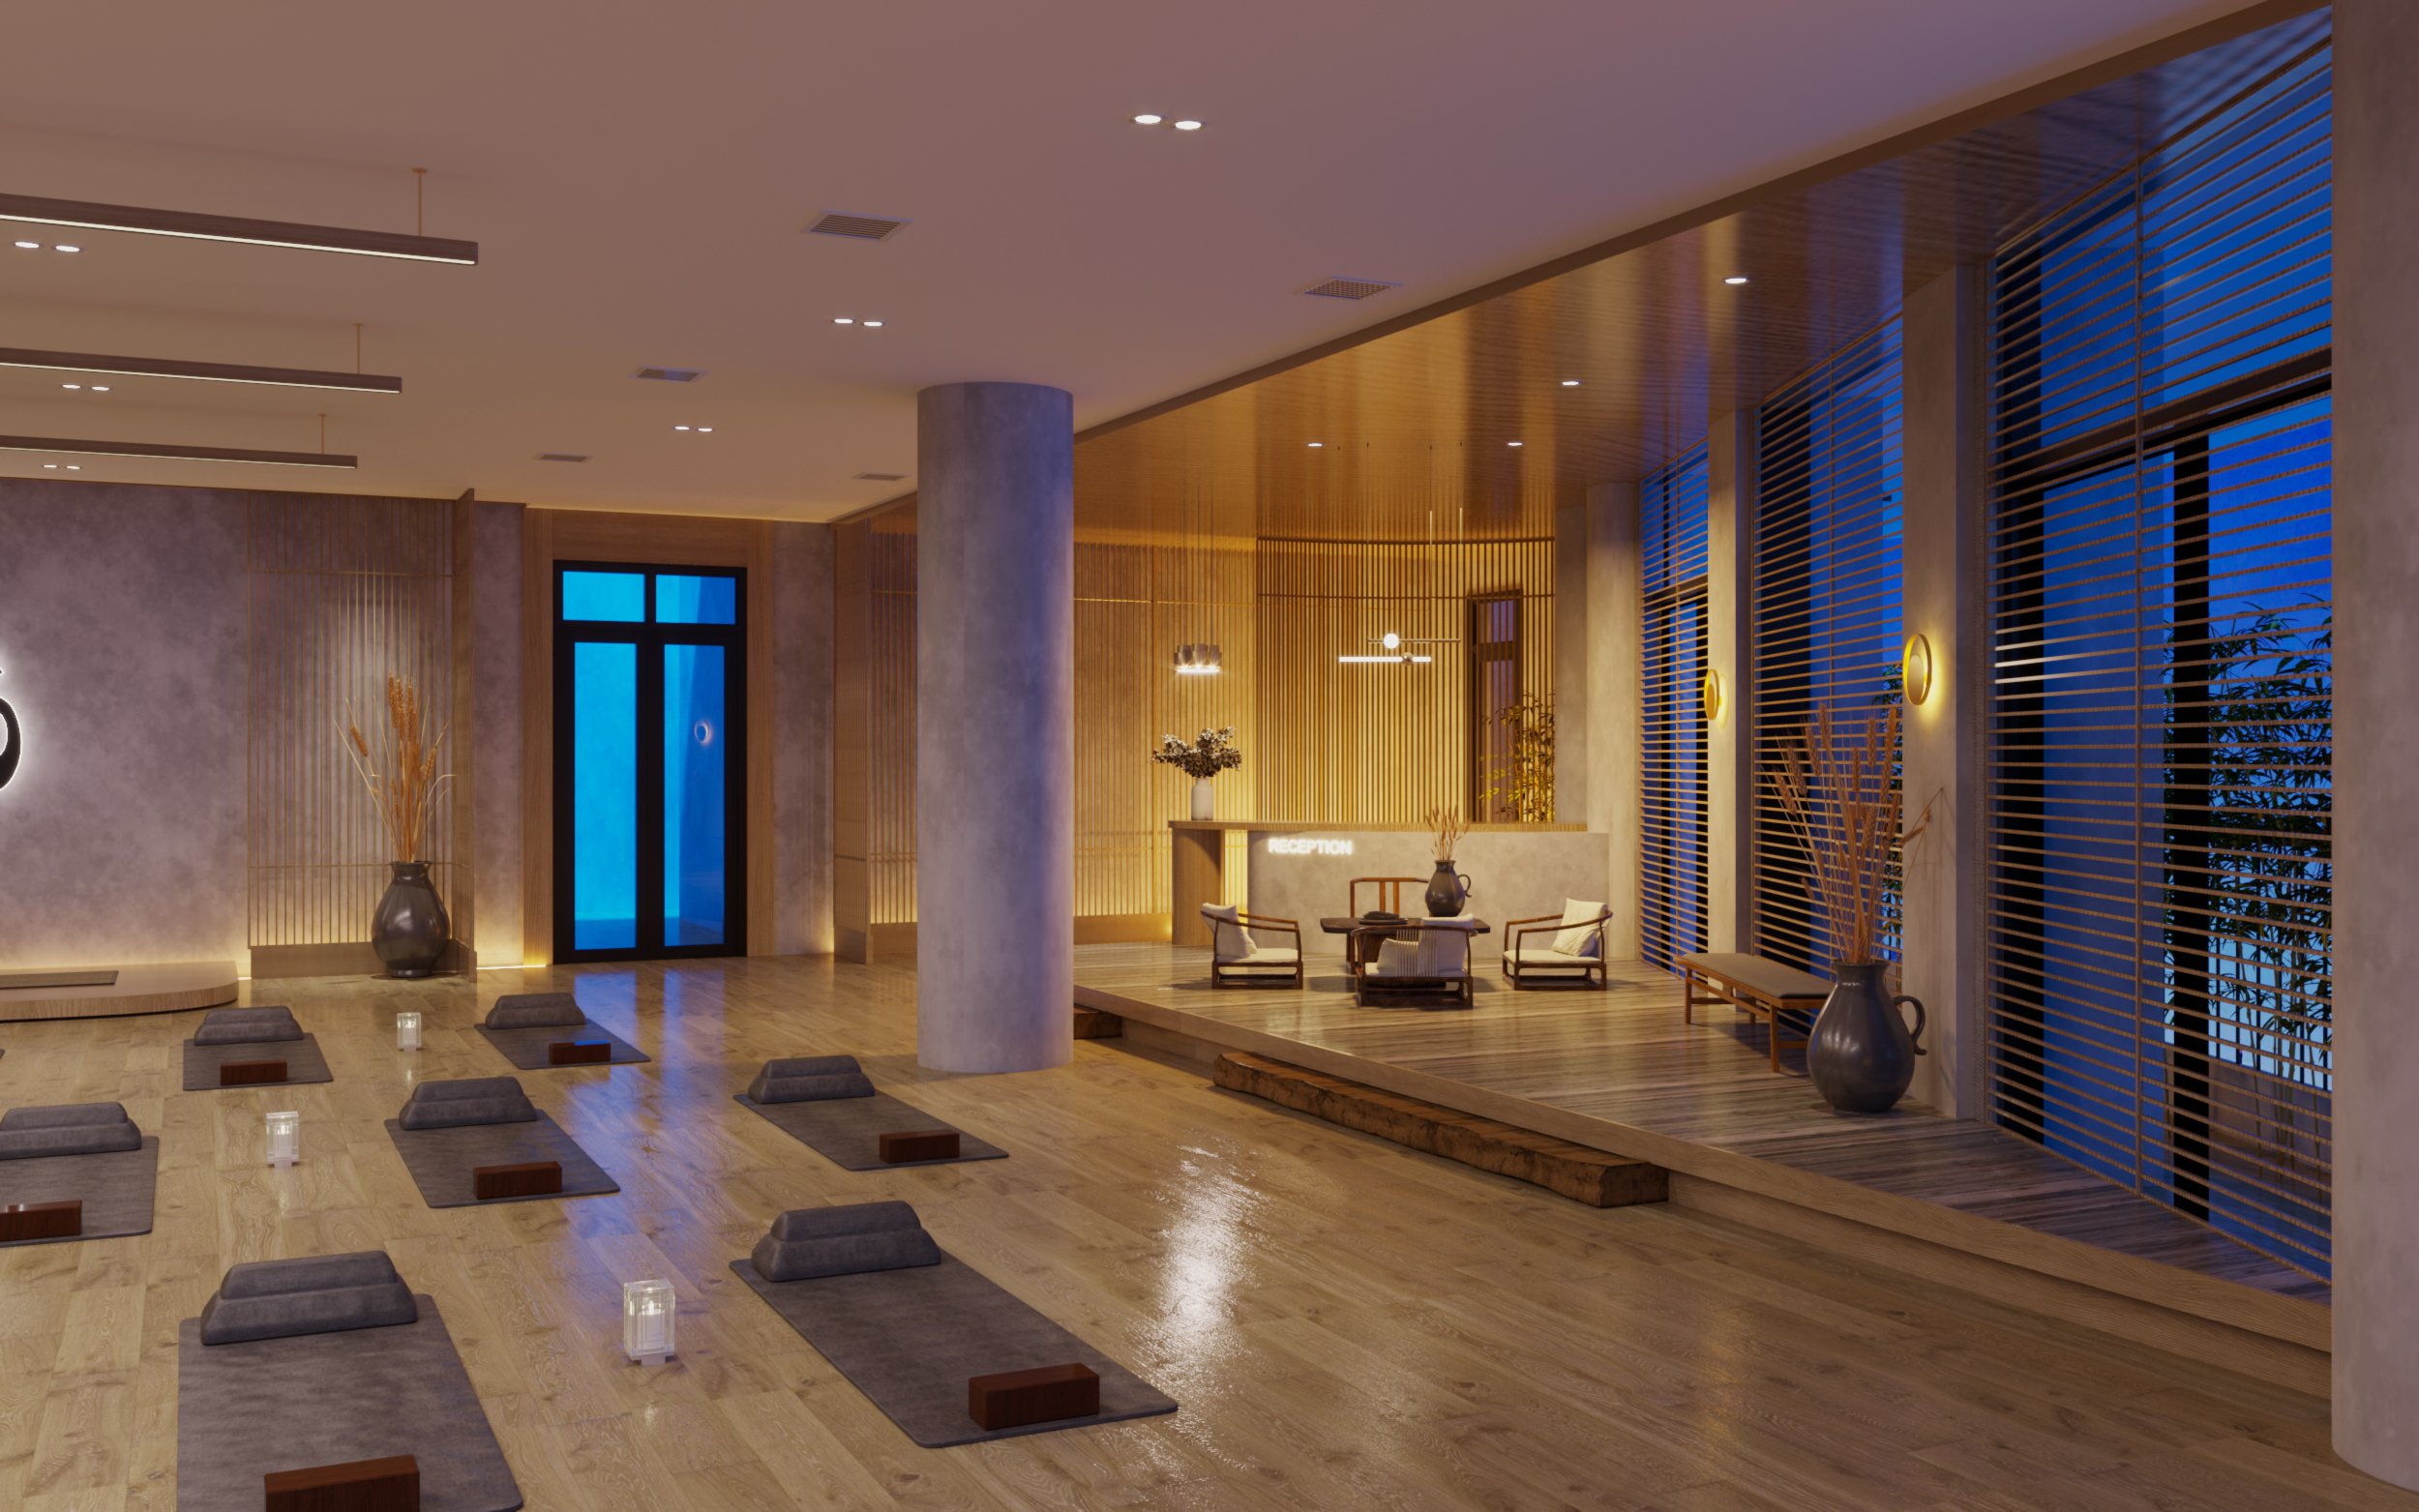 Thiết kế nội thất Spa tại Phú Thọ Yoga Design Phu Tho 1632150707 2